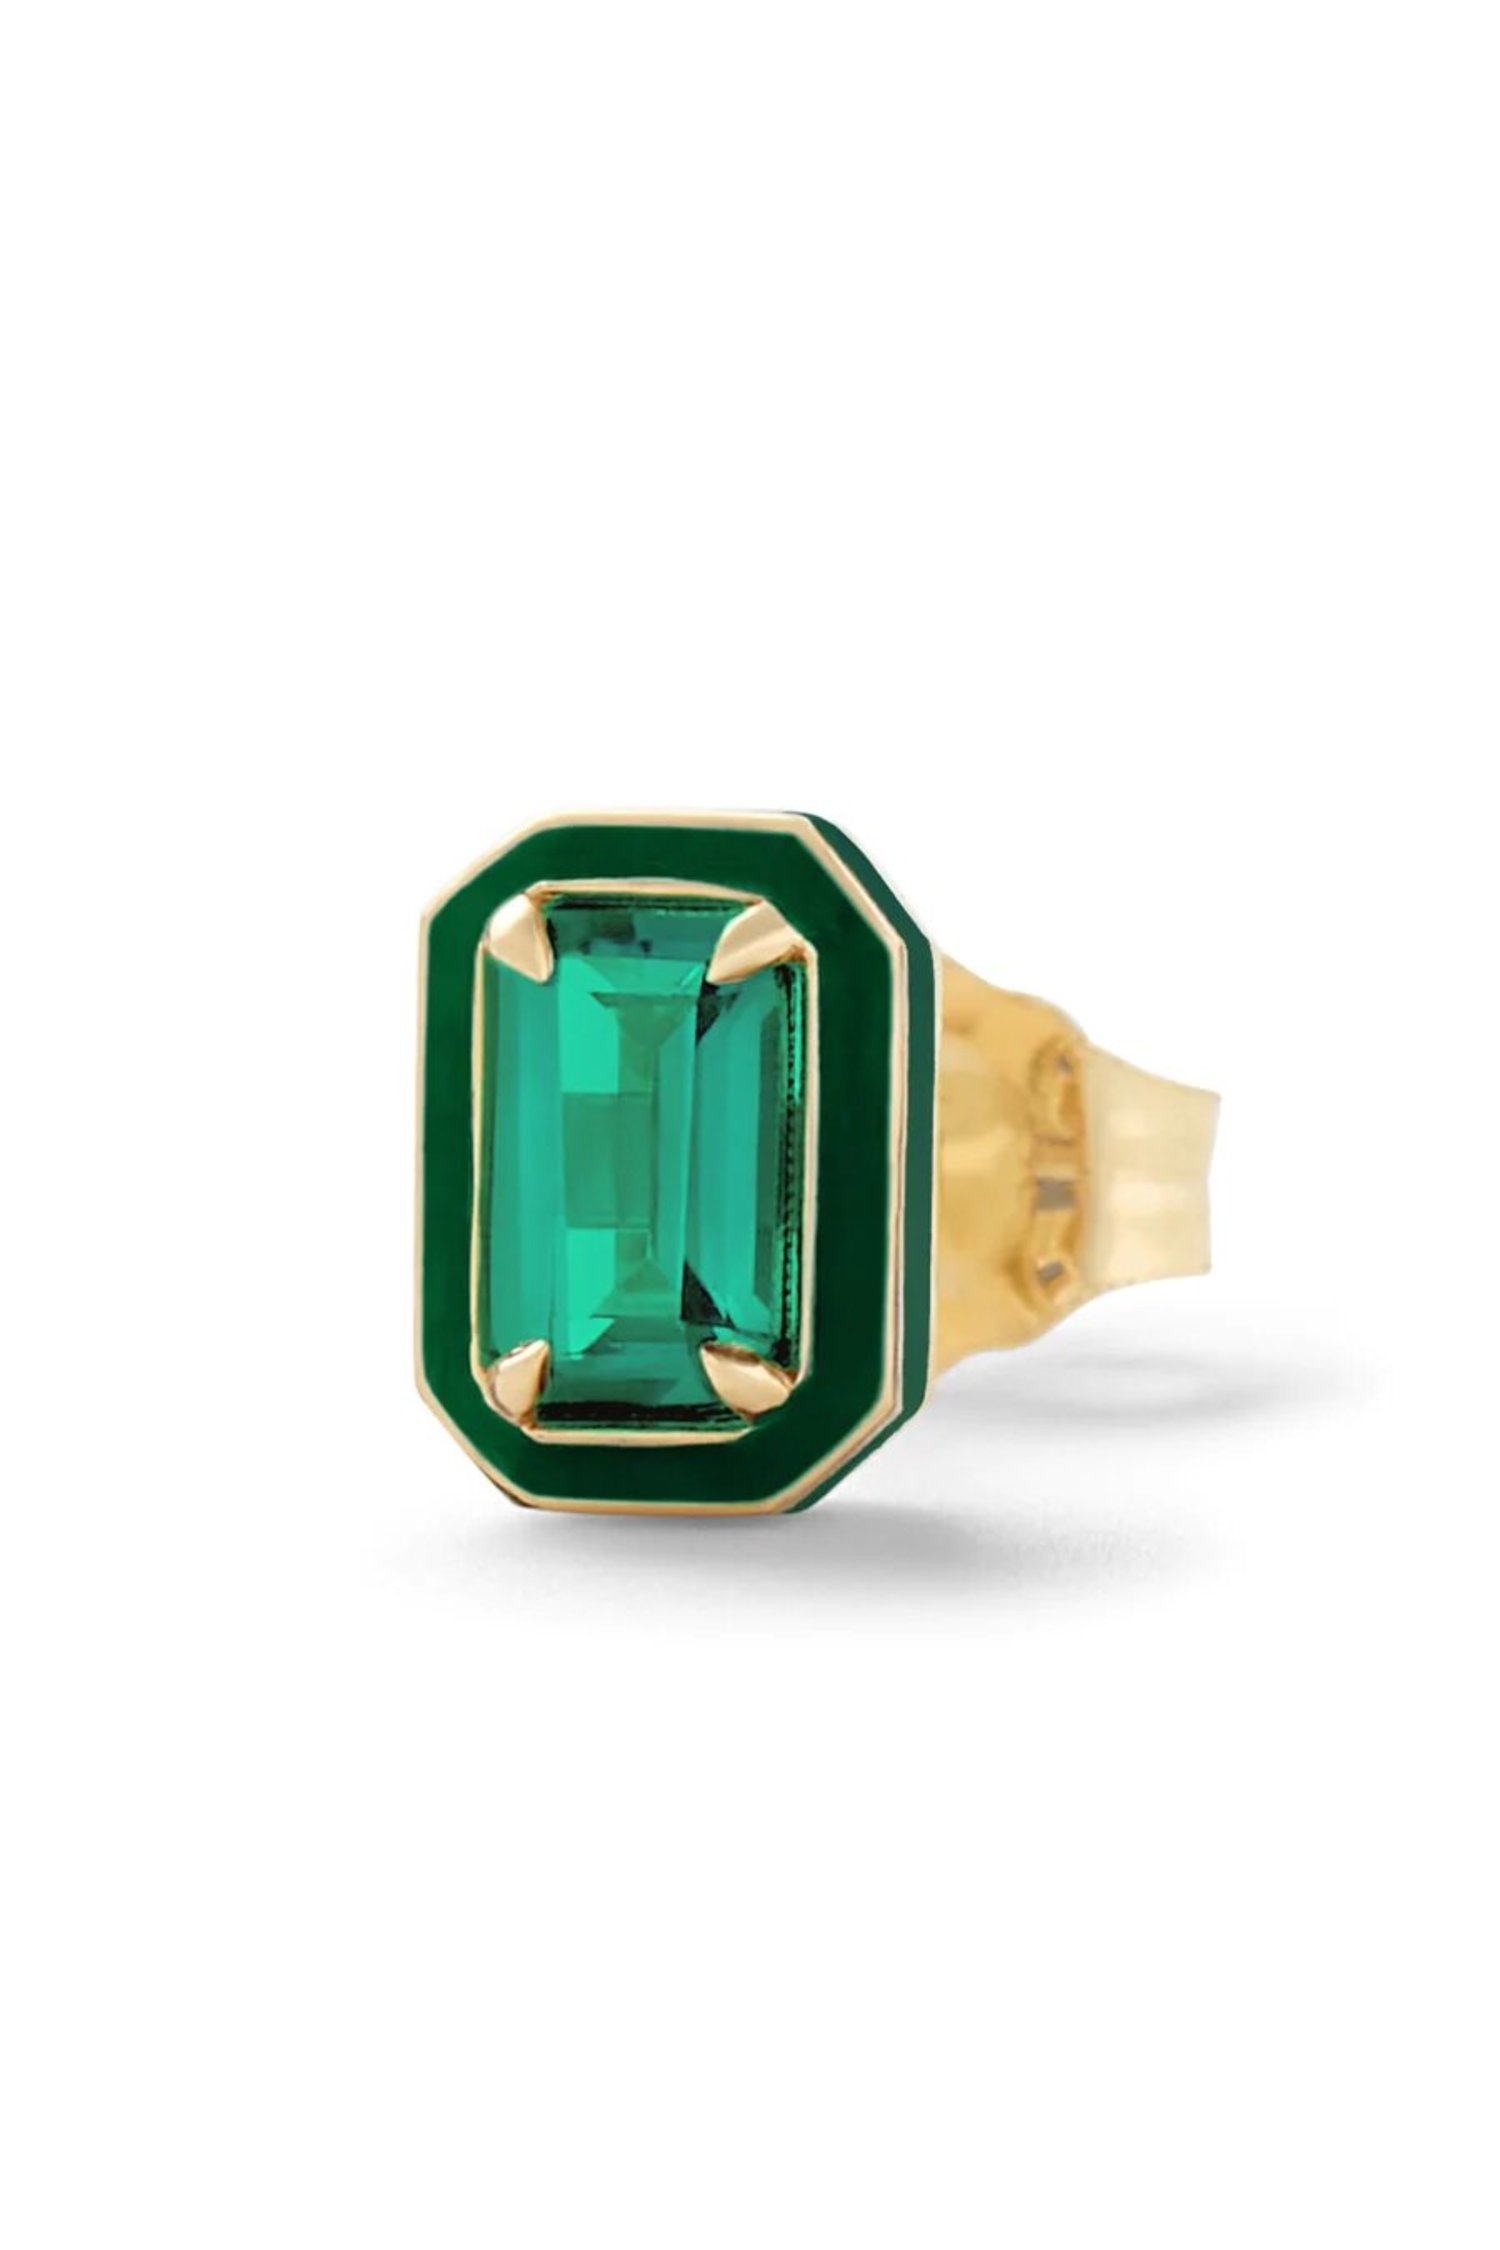 Mini Rectangular Emerald Cocktail Stud in 14K Yellow Gold